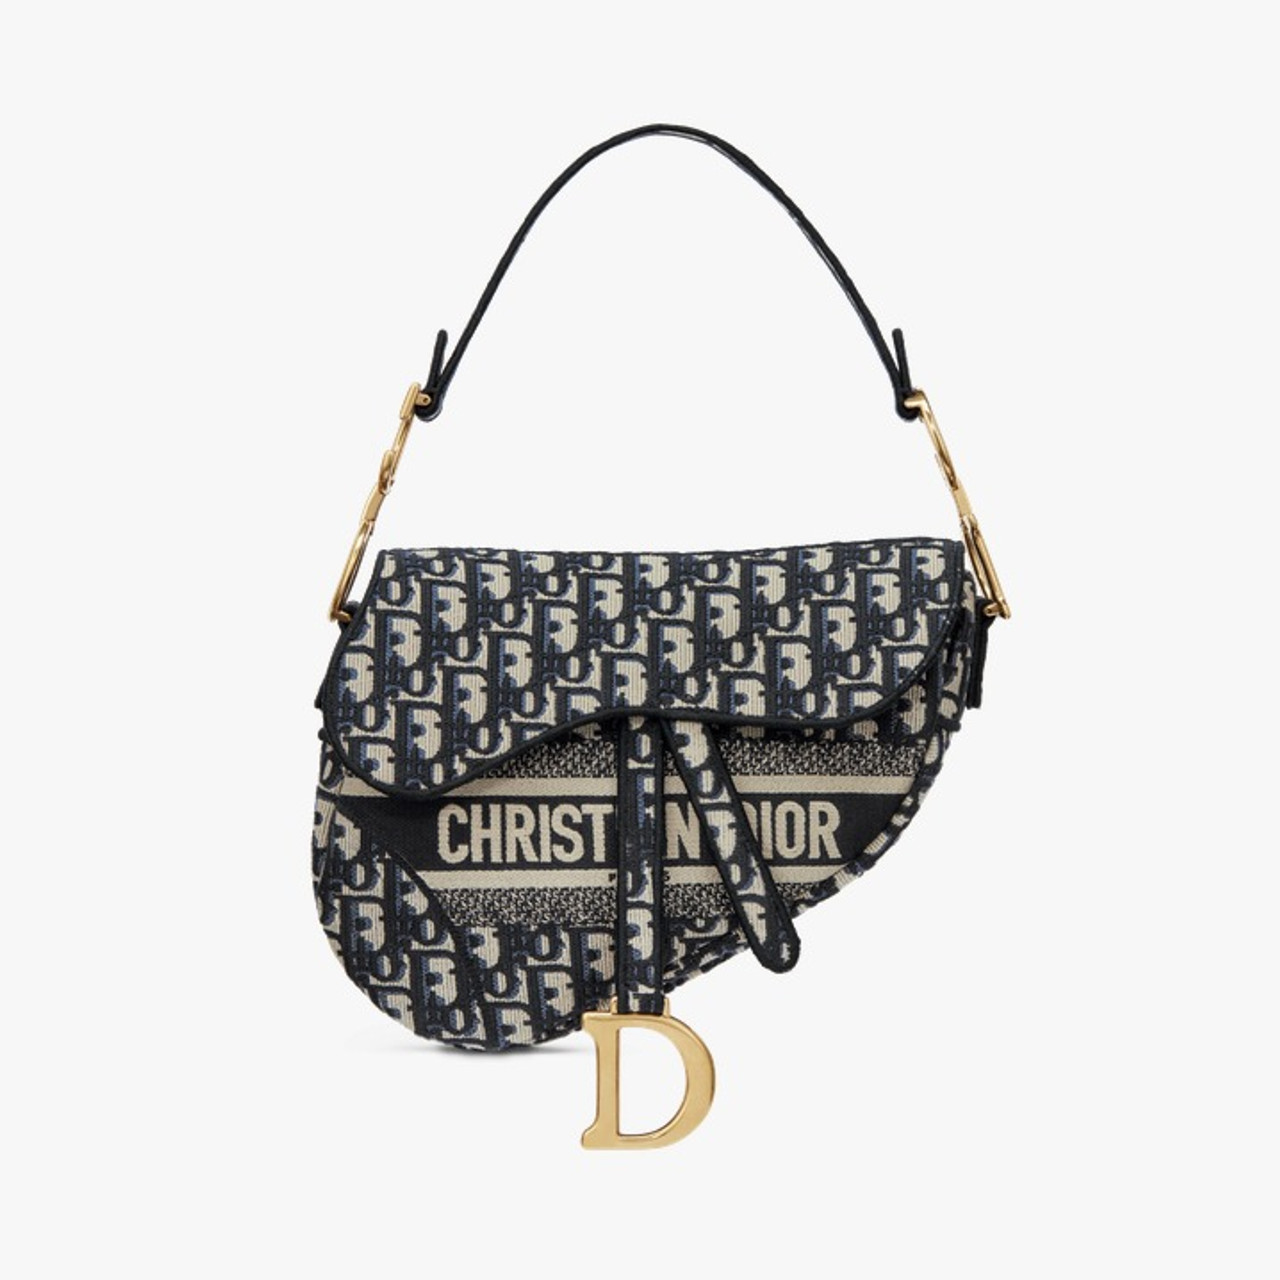 Pu Leather Christian Dior Handbag at Rs 3500/bag in Mumbai | ID: 24937499812